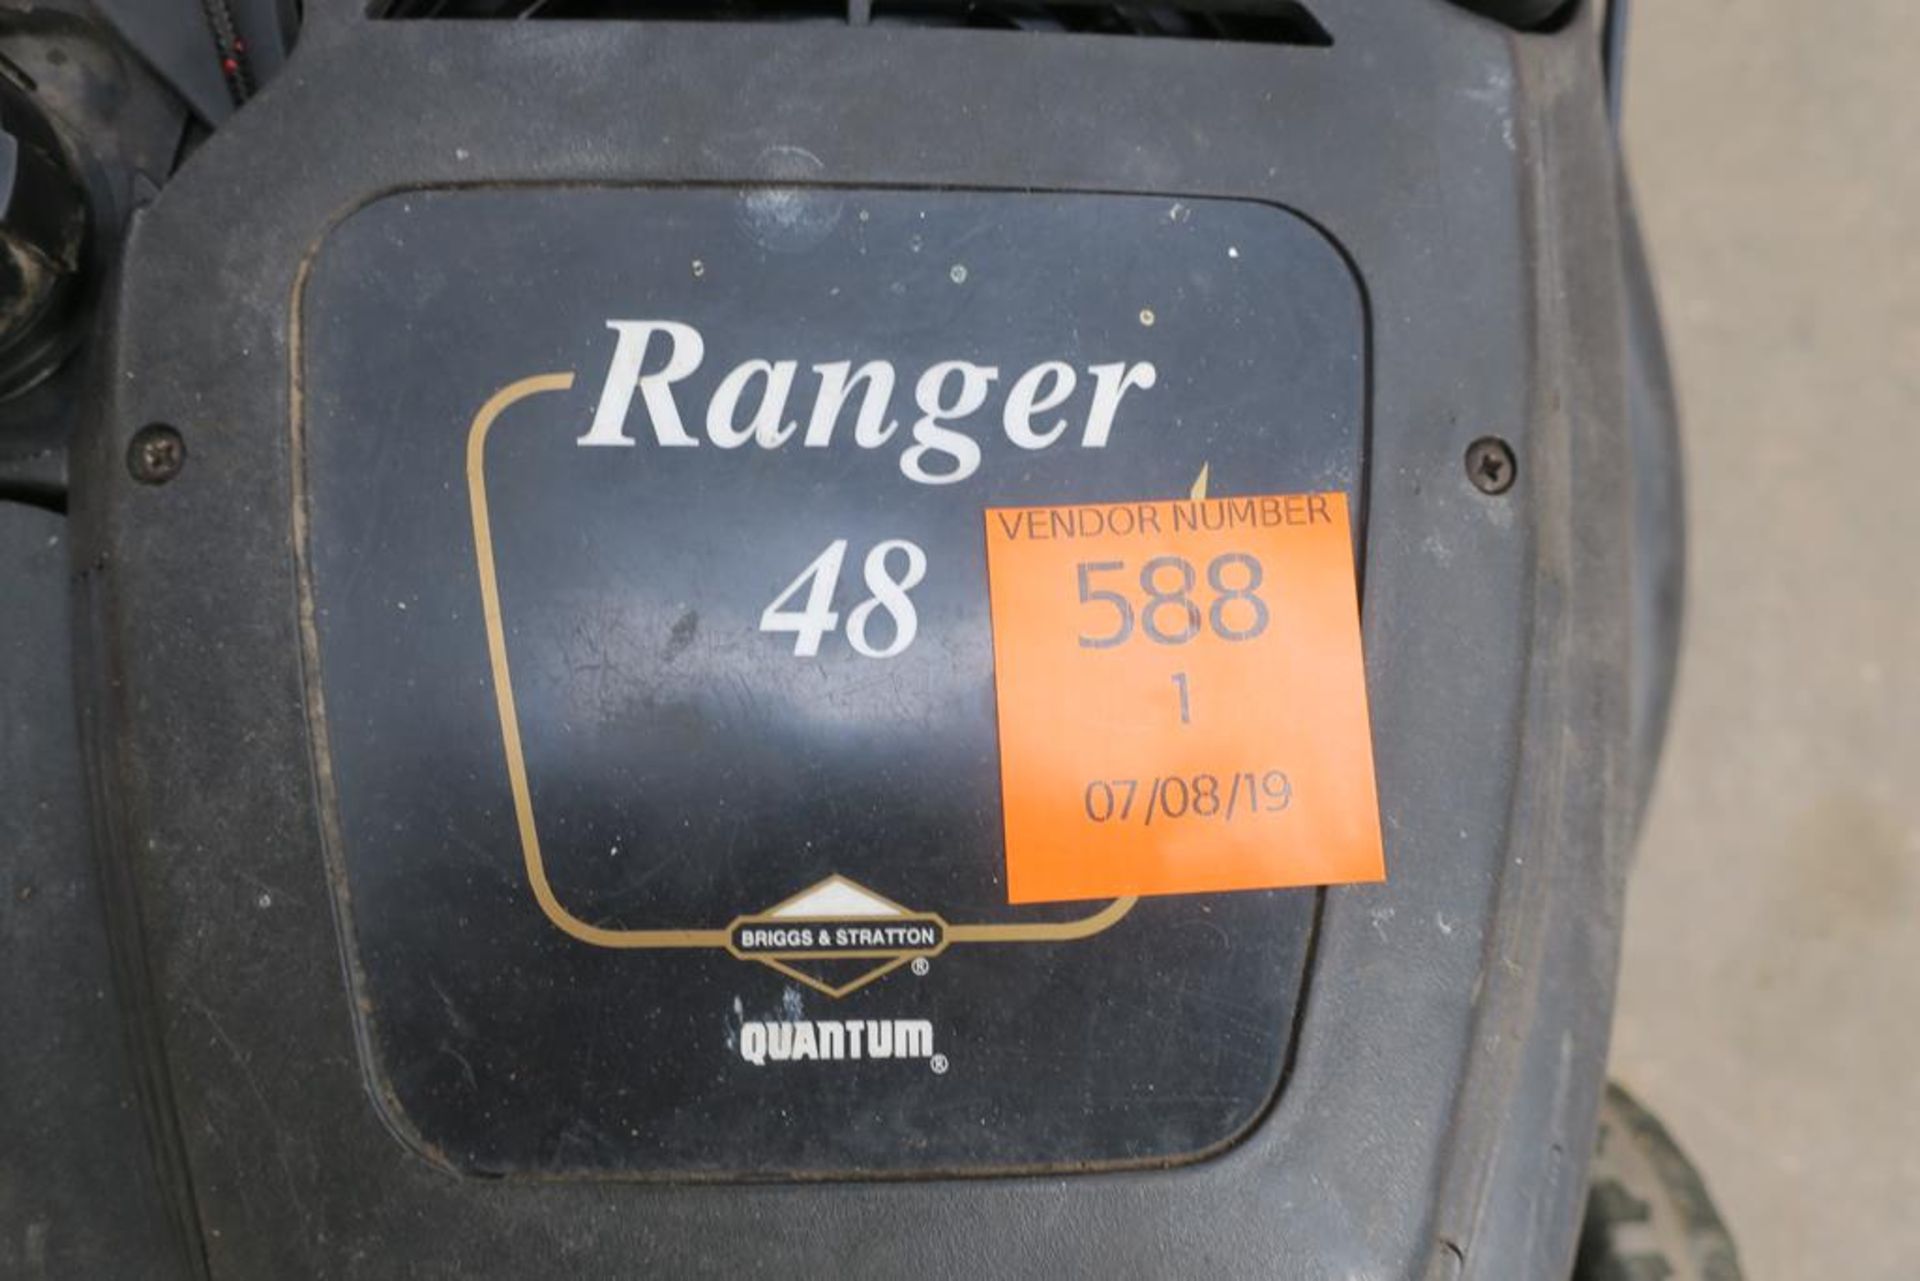 A Haytor Ranger 48 Petrol Mower - Image 2 of 5